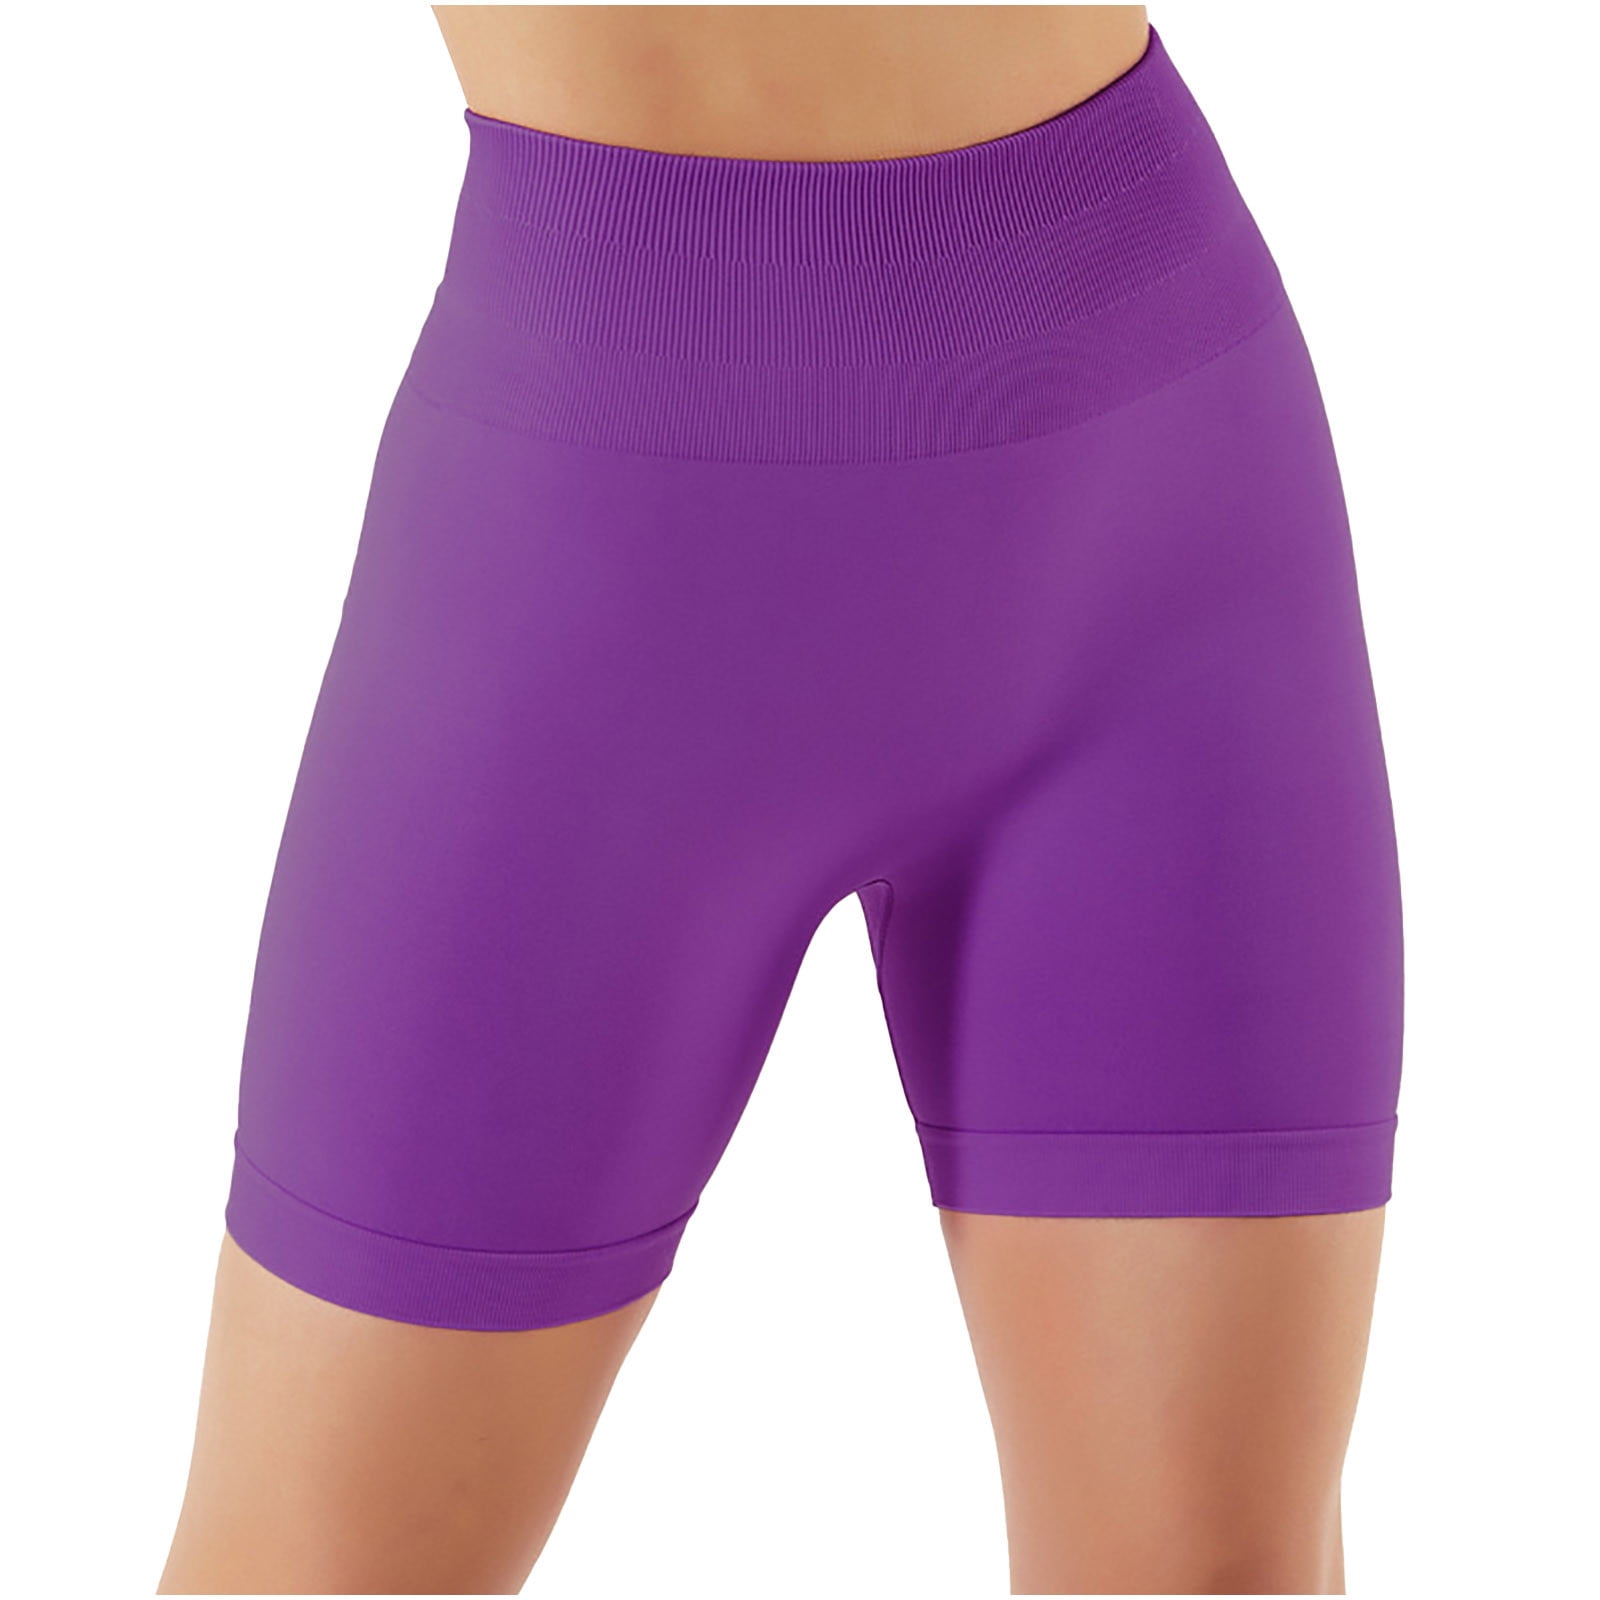 FAIWAD Womens Butt Lift Shorts High Waist Athletic Yoga Pants Slim Seamless  Solid Color Leggings (Small, Gray) 